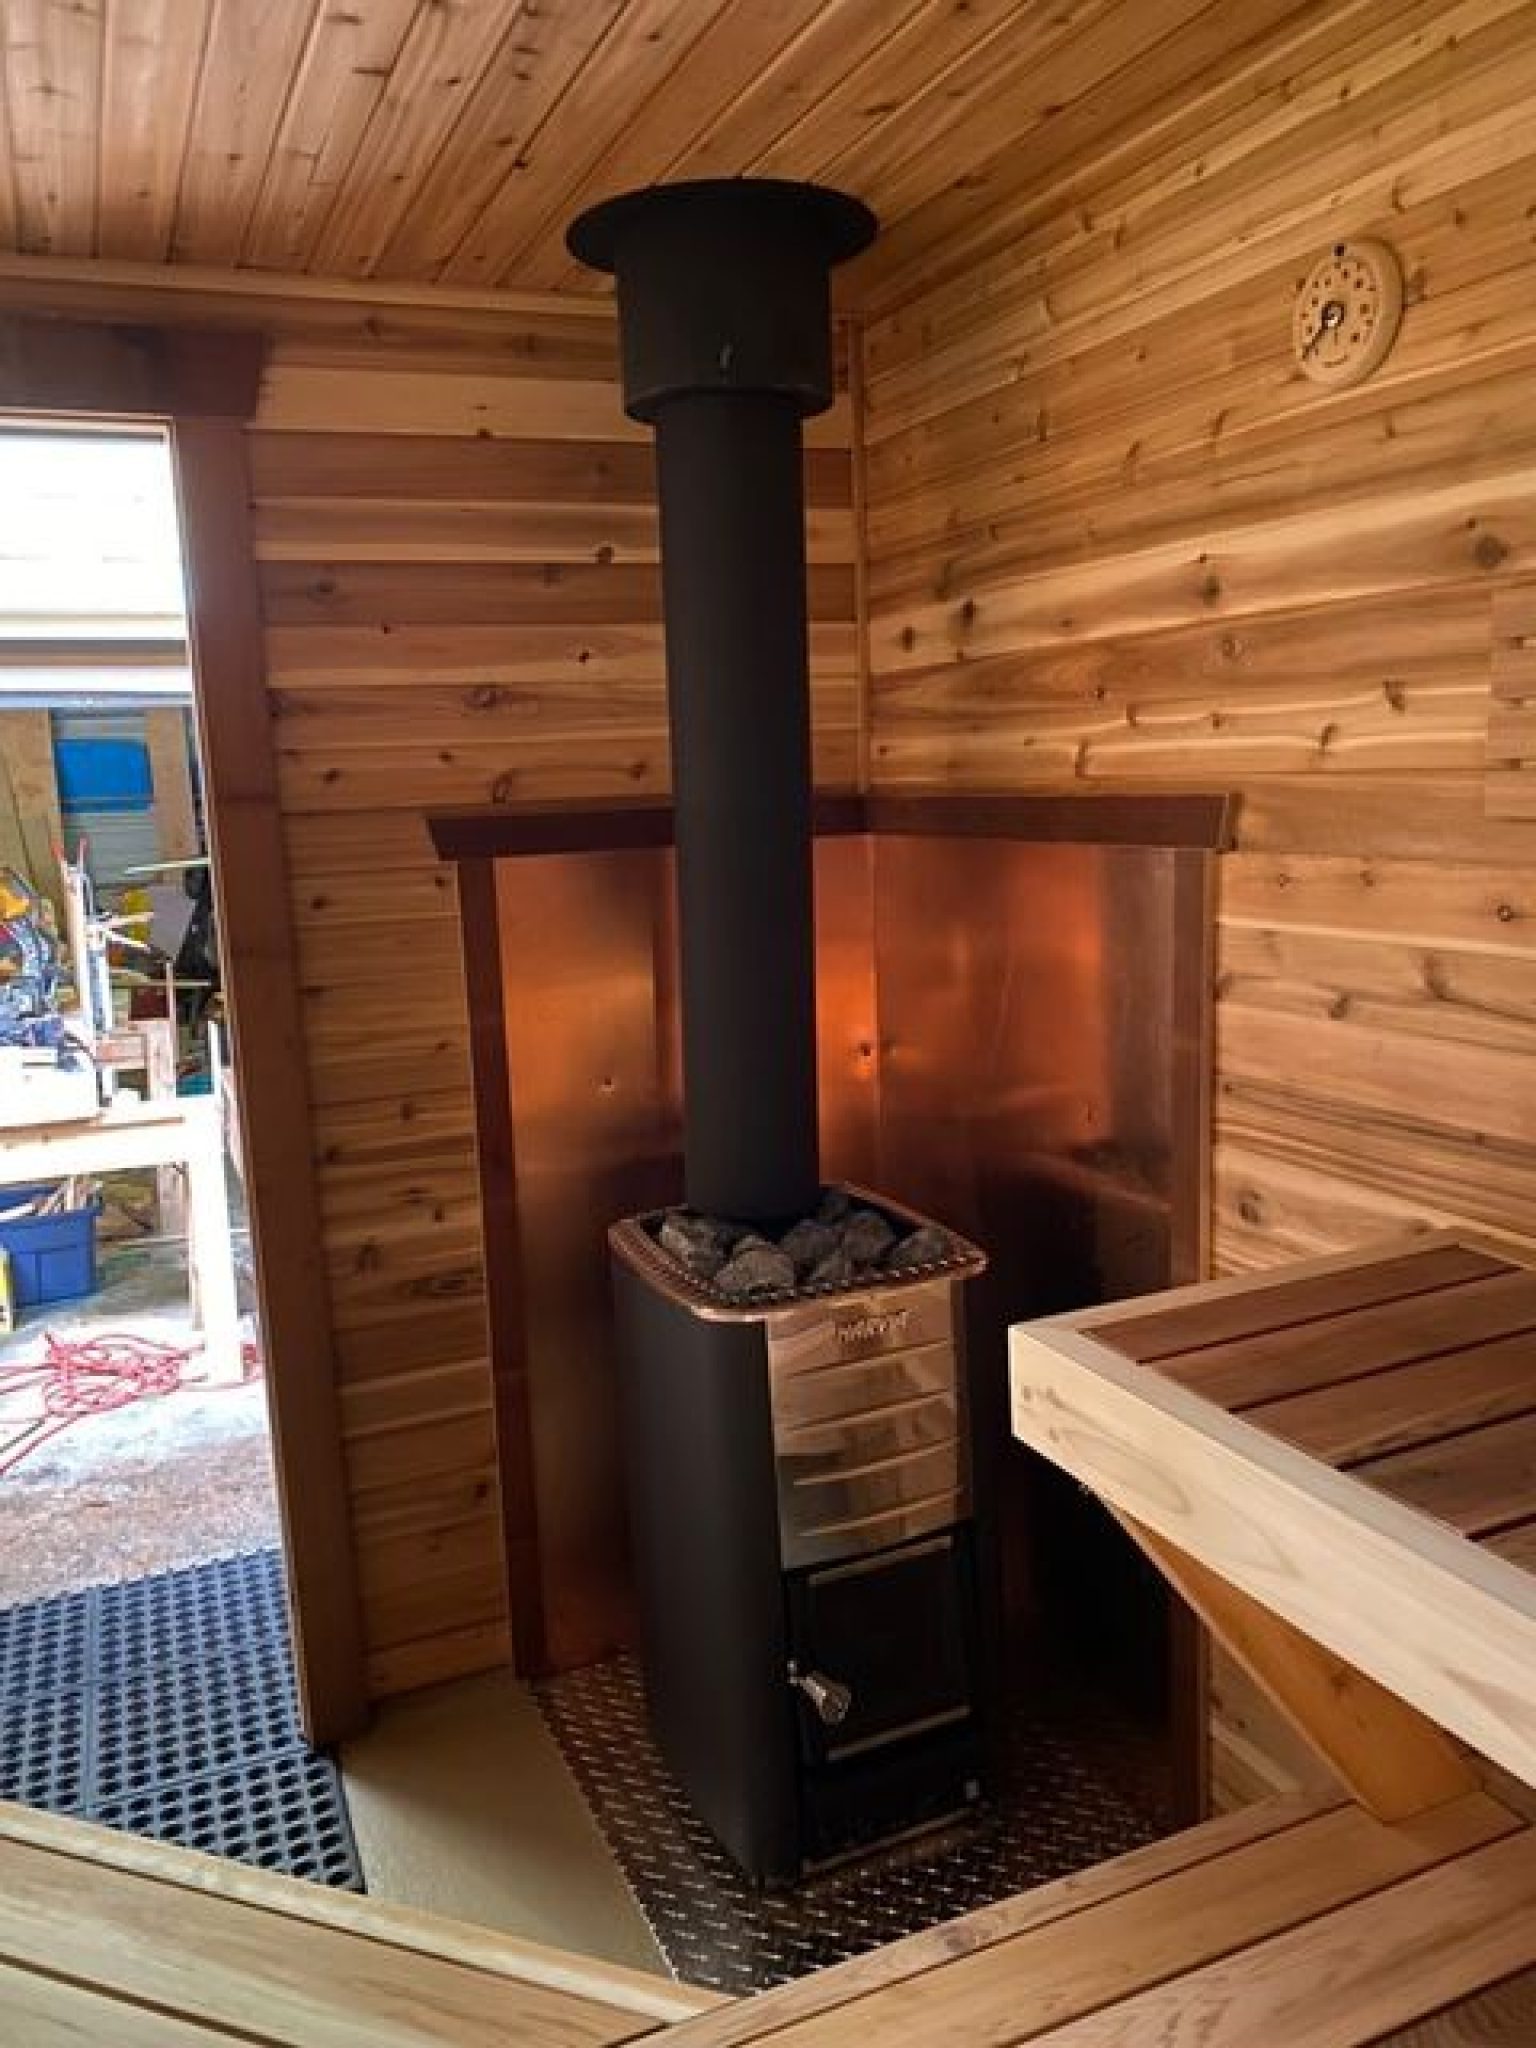 the finnish sauna stove inside